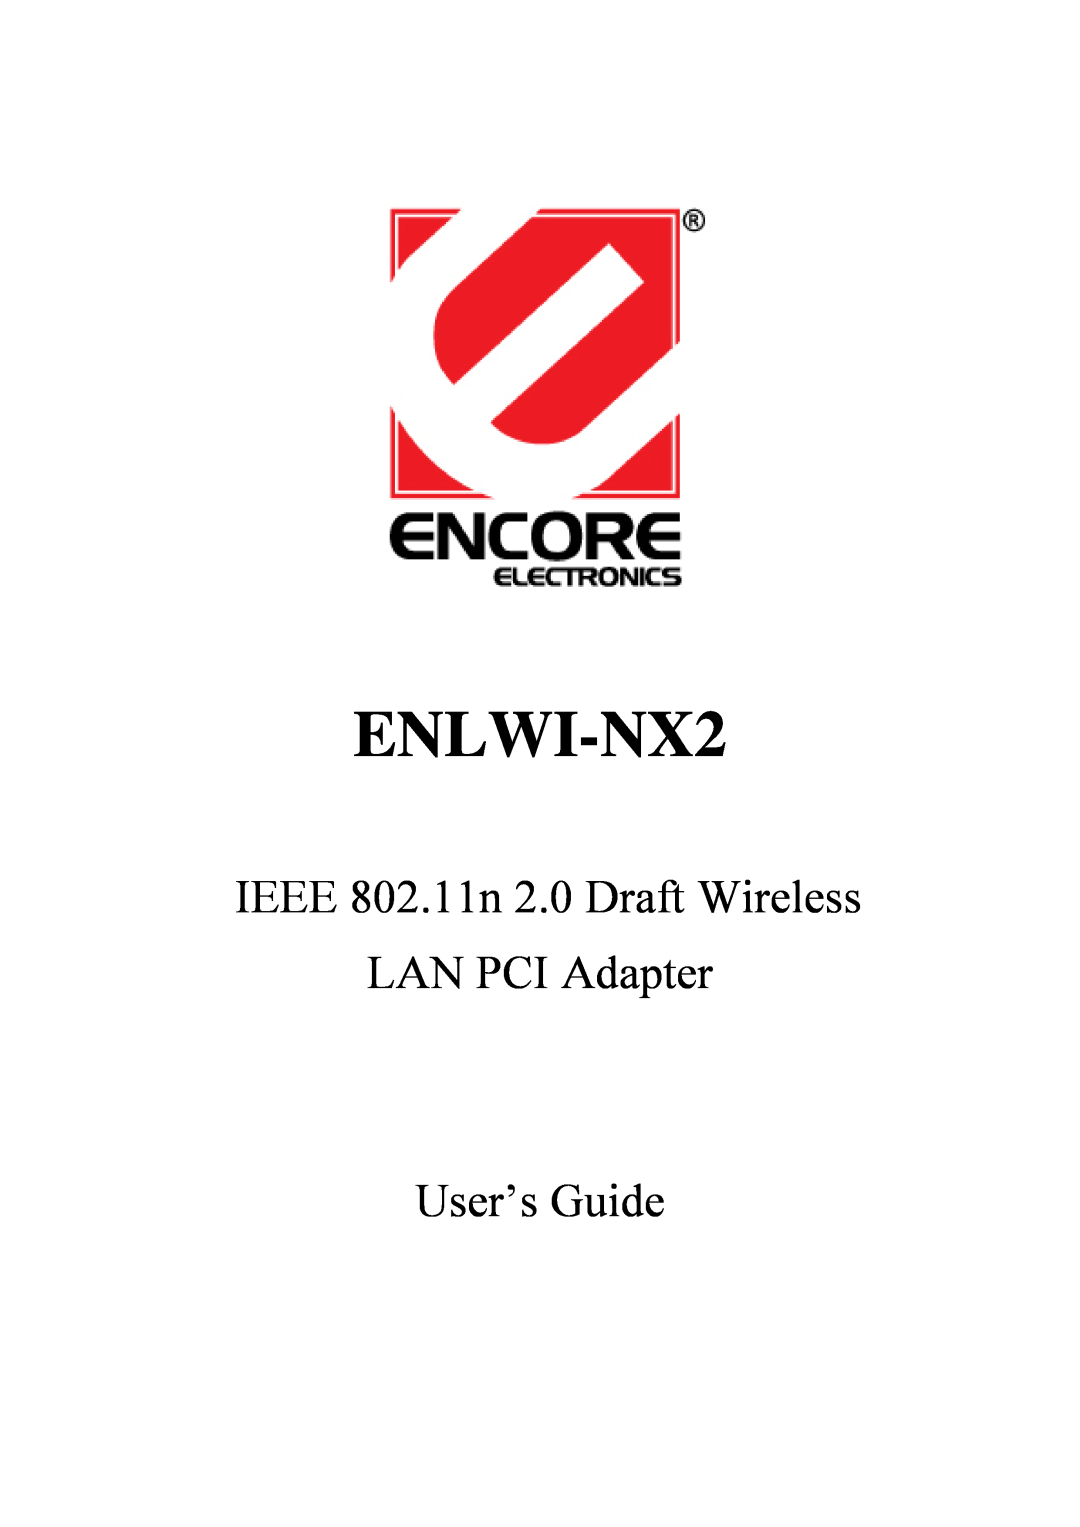 Encore electronic ENLWI-NX2 manual IEEE 802.11n 2.0 Draft Wireless LAN PCI Adapter User’s Guide 